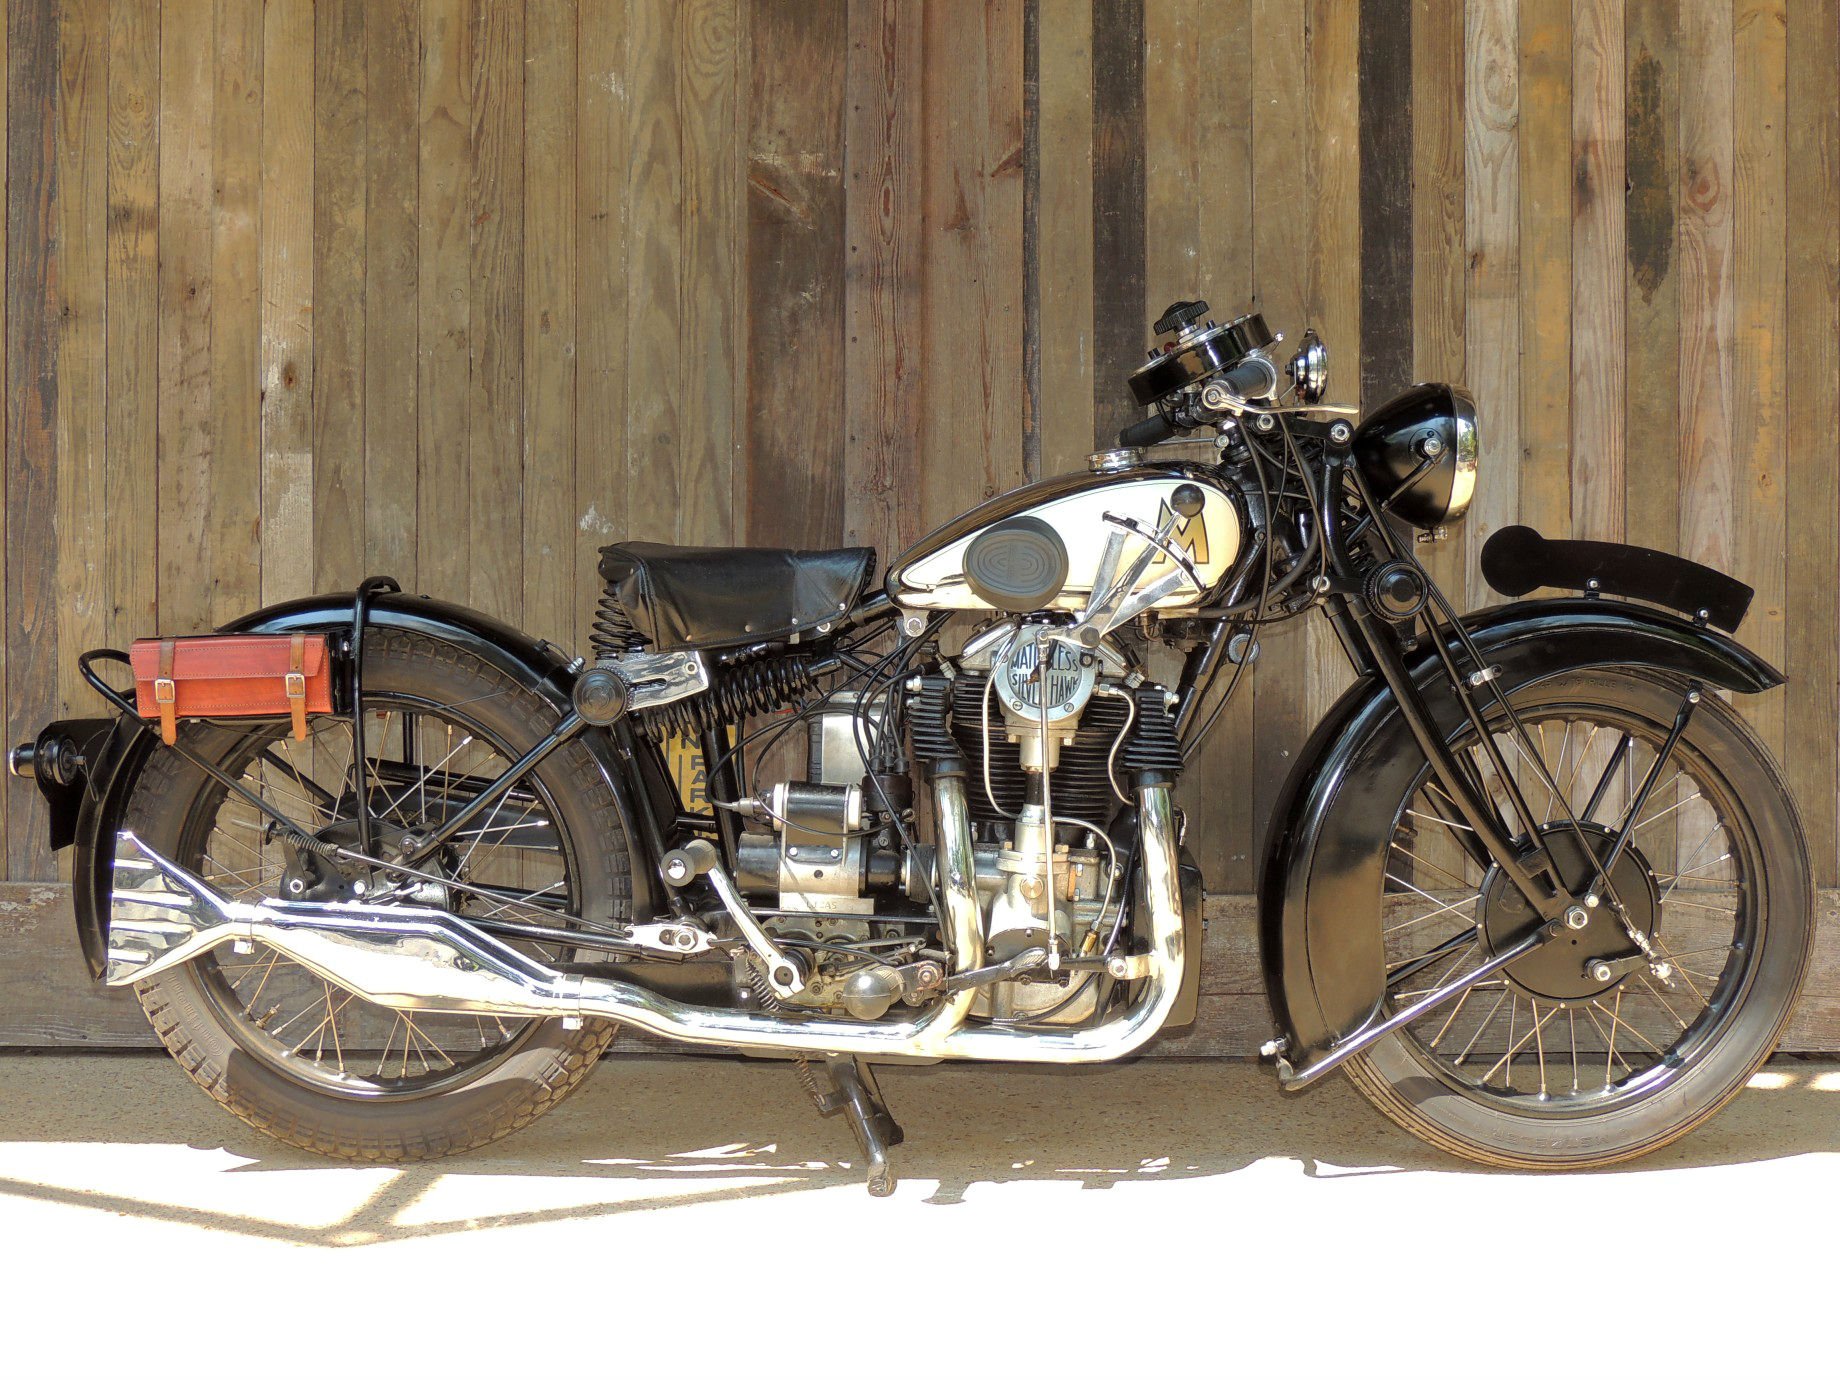 matchless, Motorcycle, Motorbike, Bike, Classic, Vintage, Retro, British Wallpaper